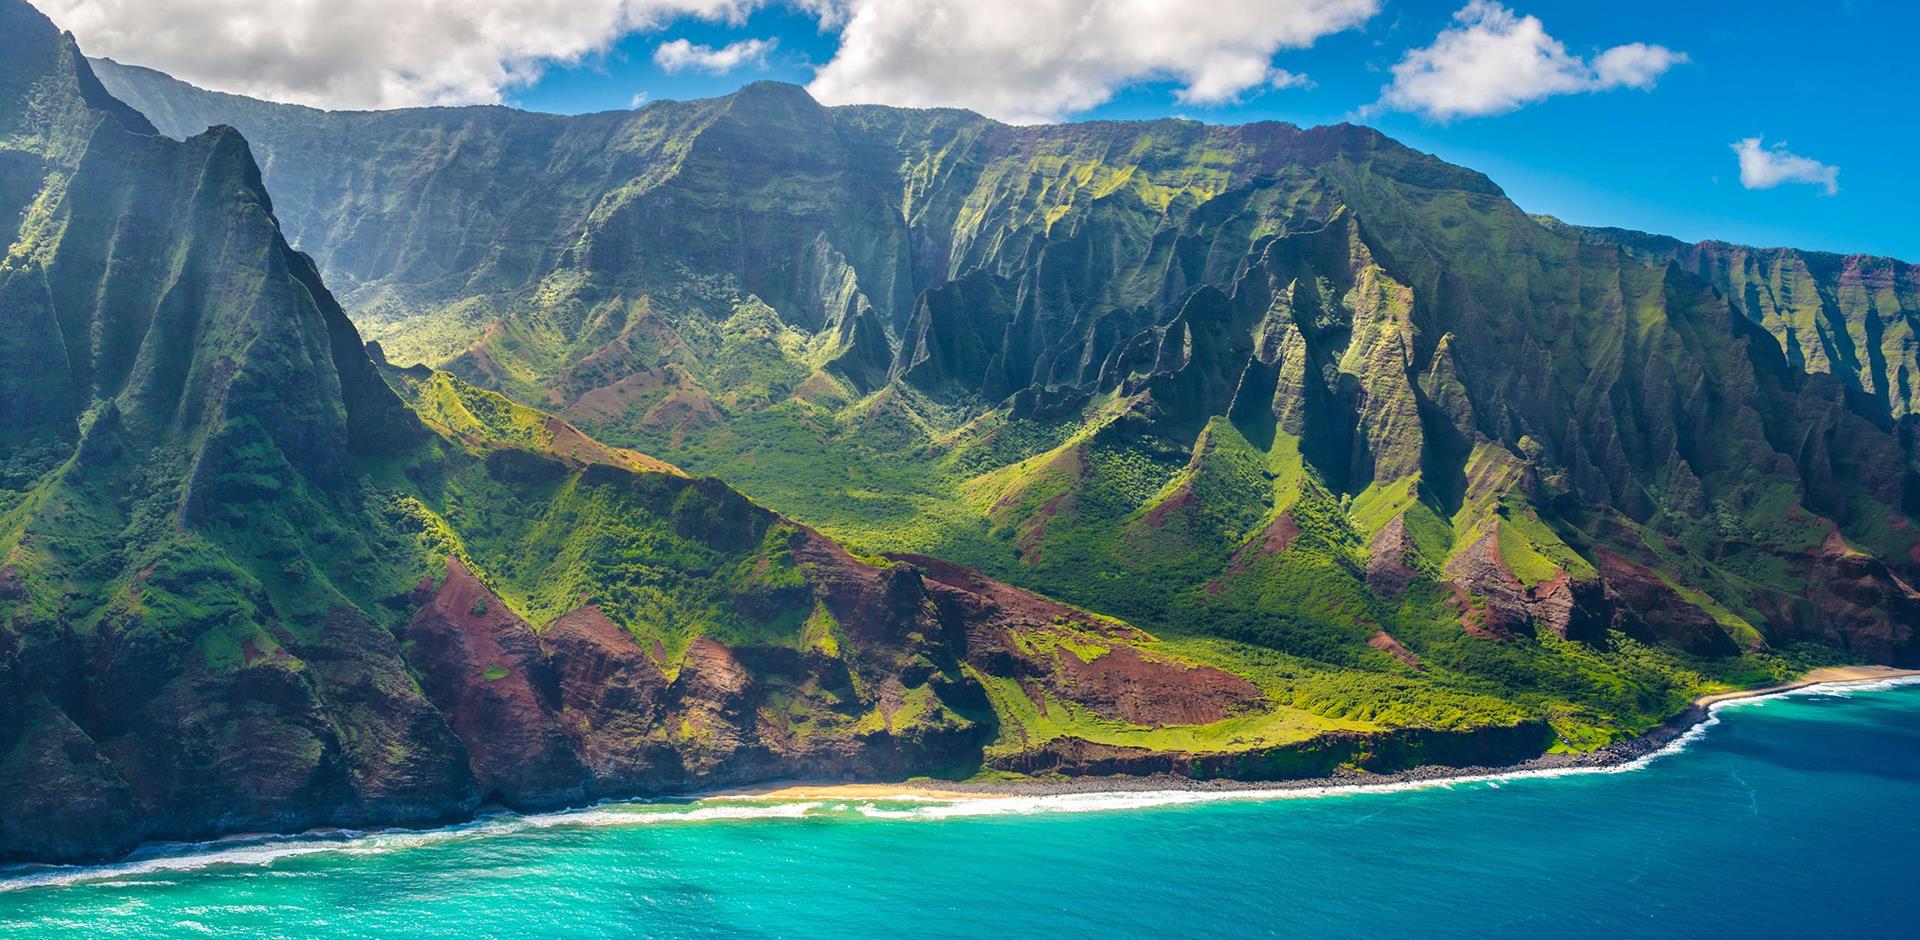 Luxury Hawaii holidays with Abercrombie & Kent, Kauai Island